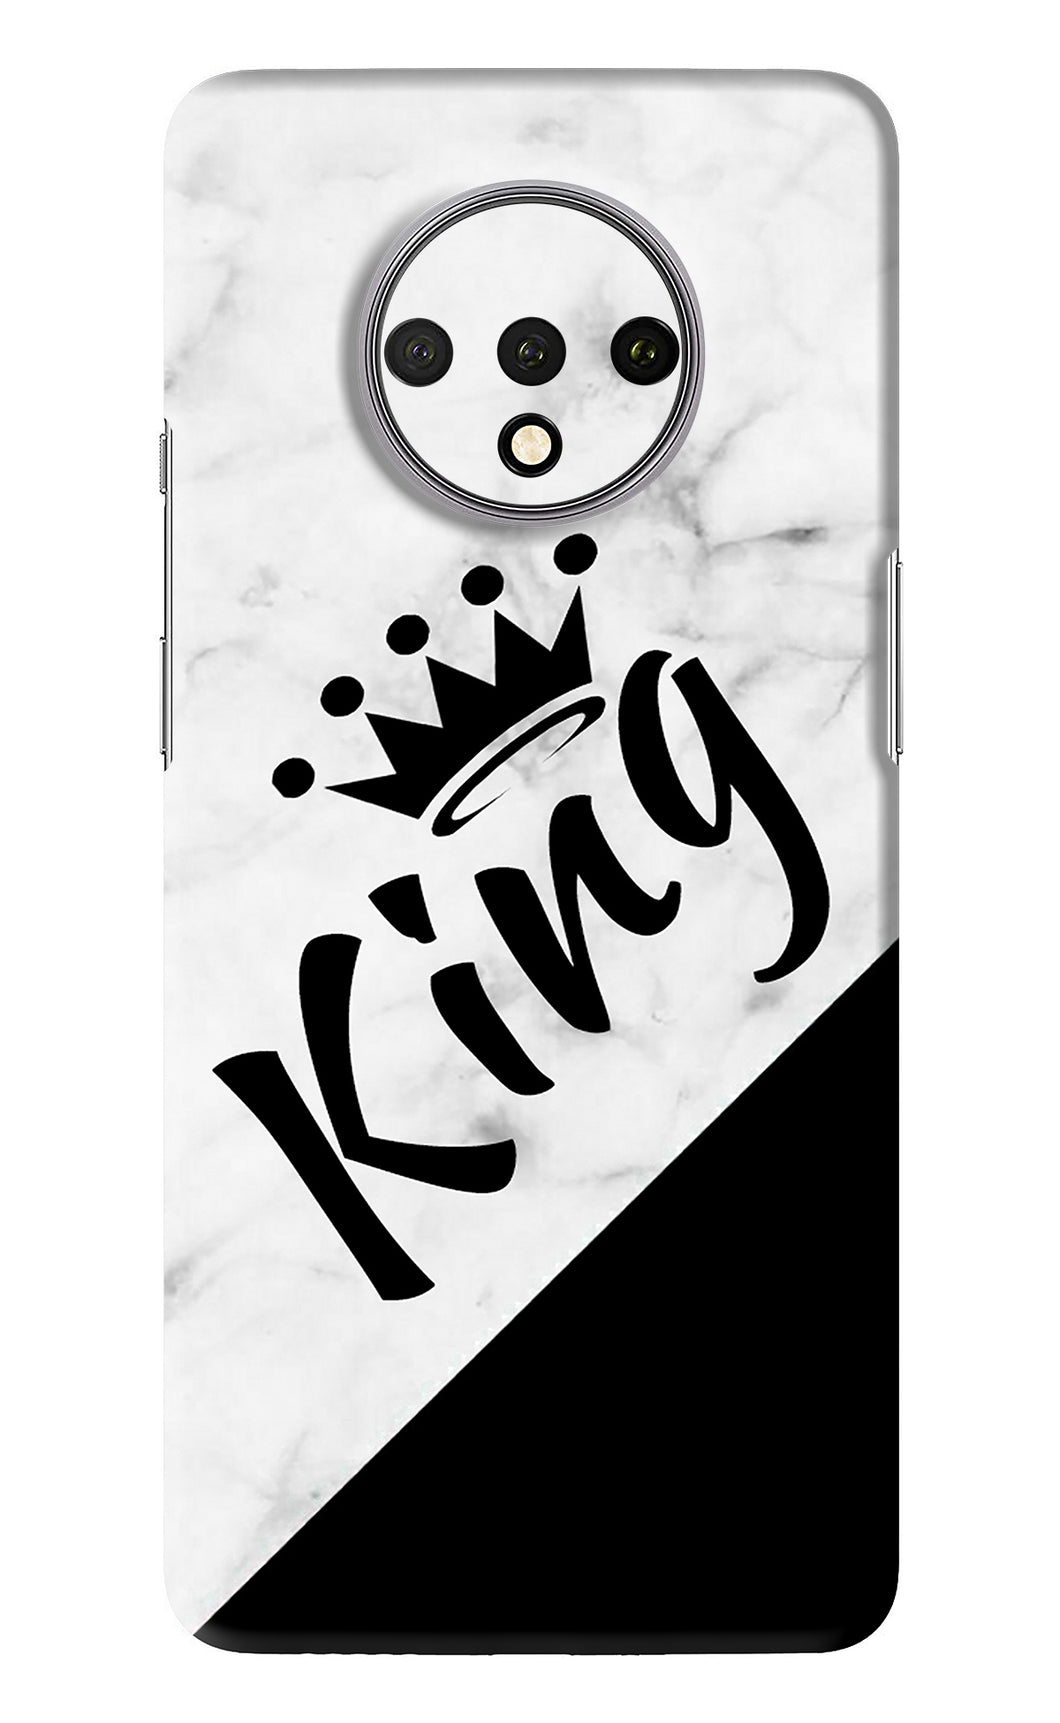 King OnePlus 7T Back Skin Wrap